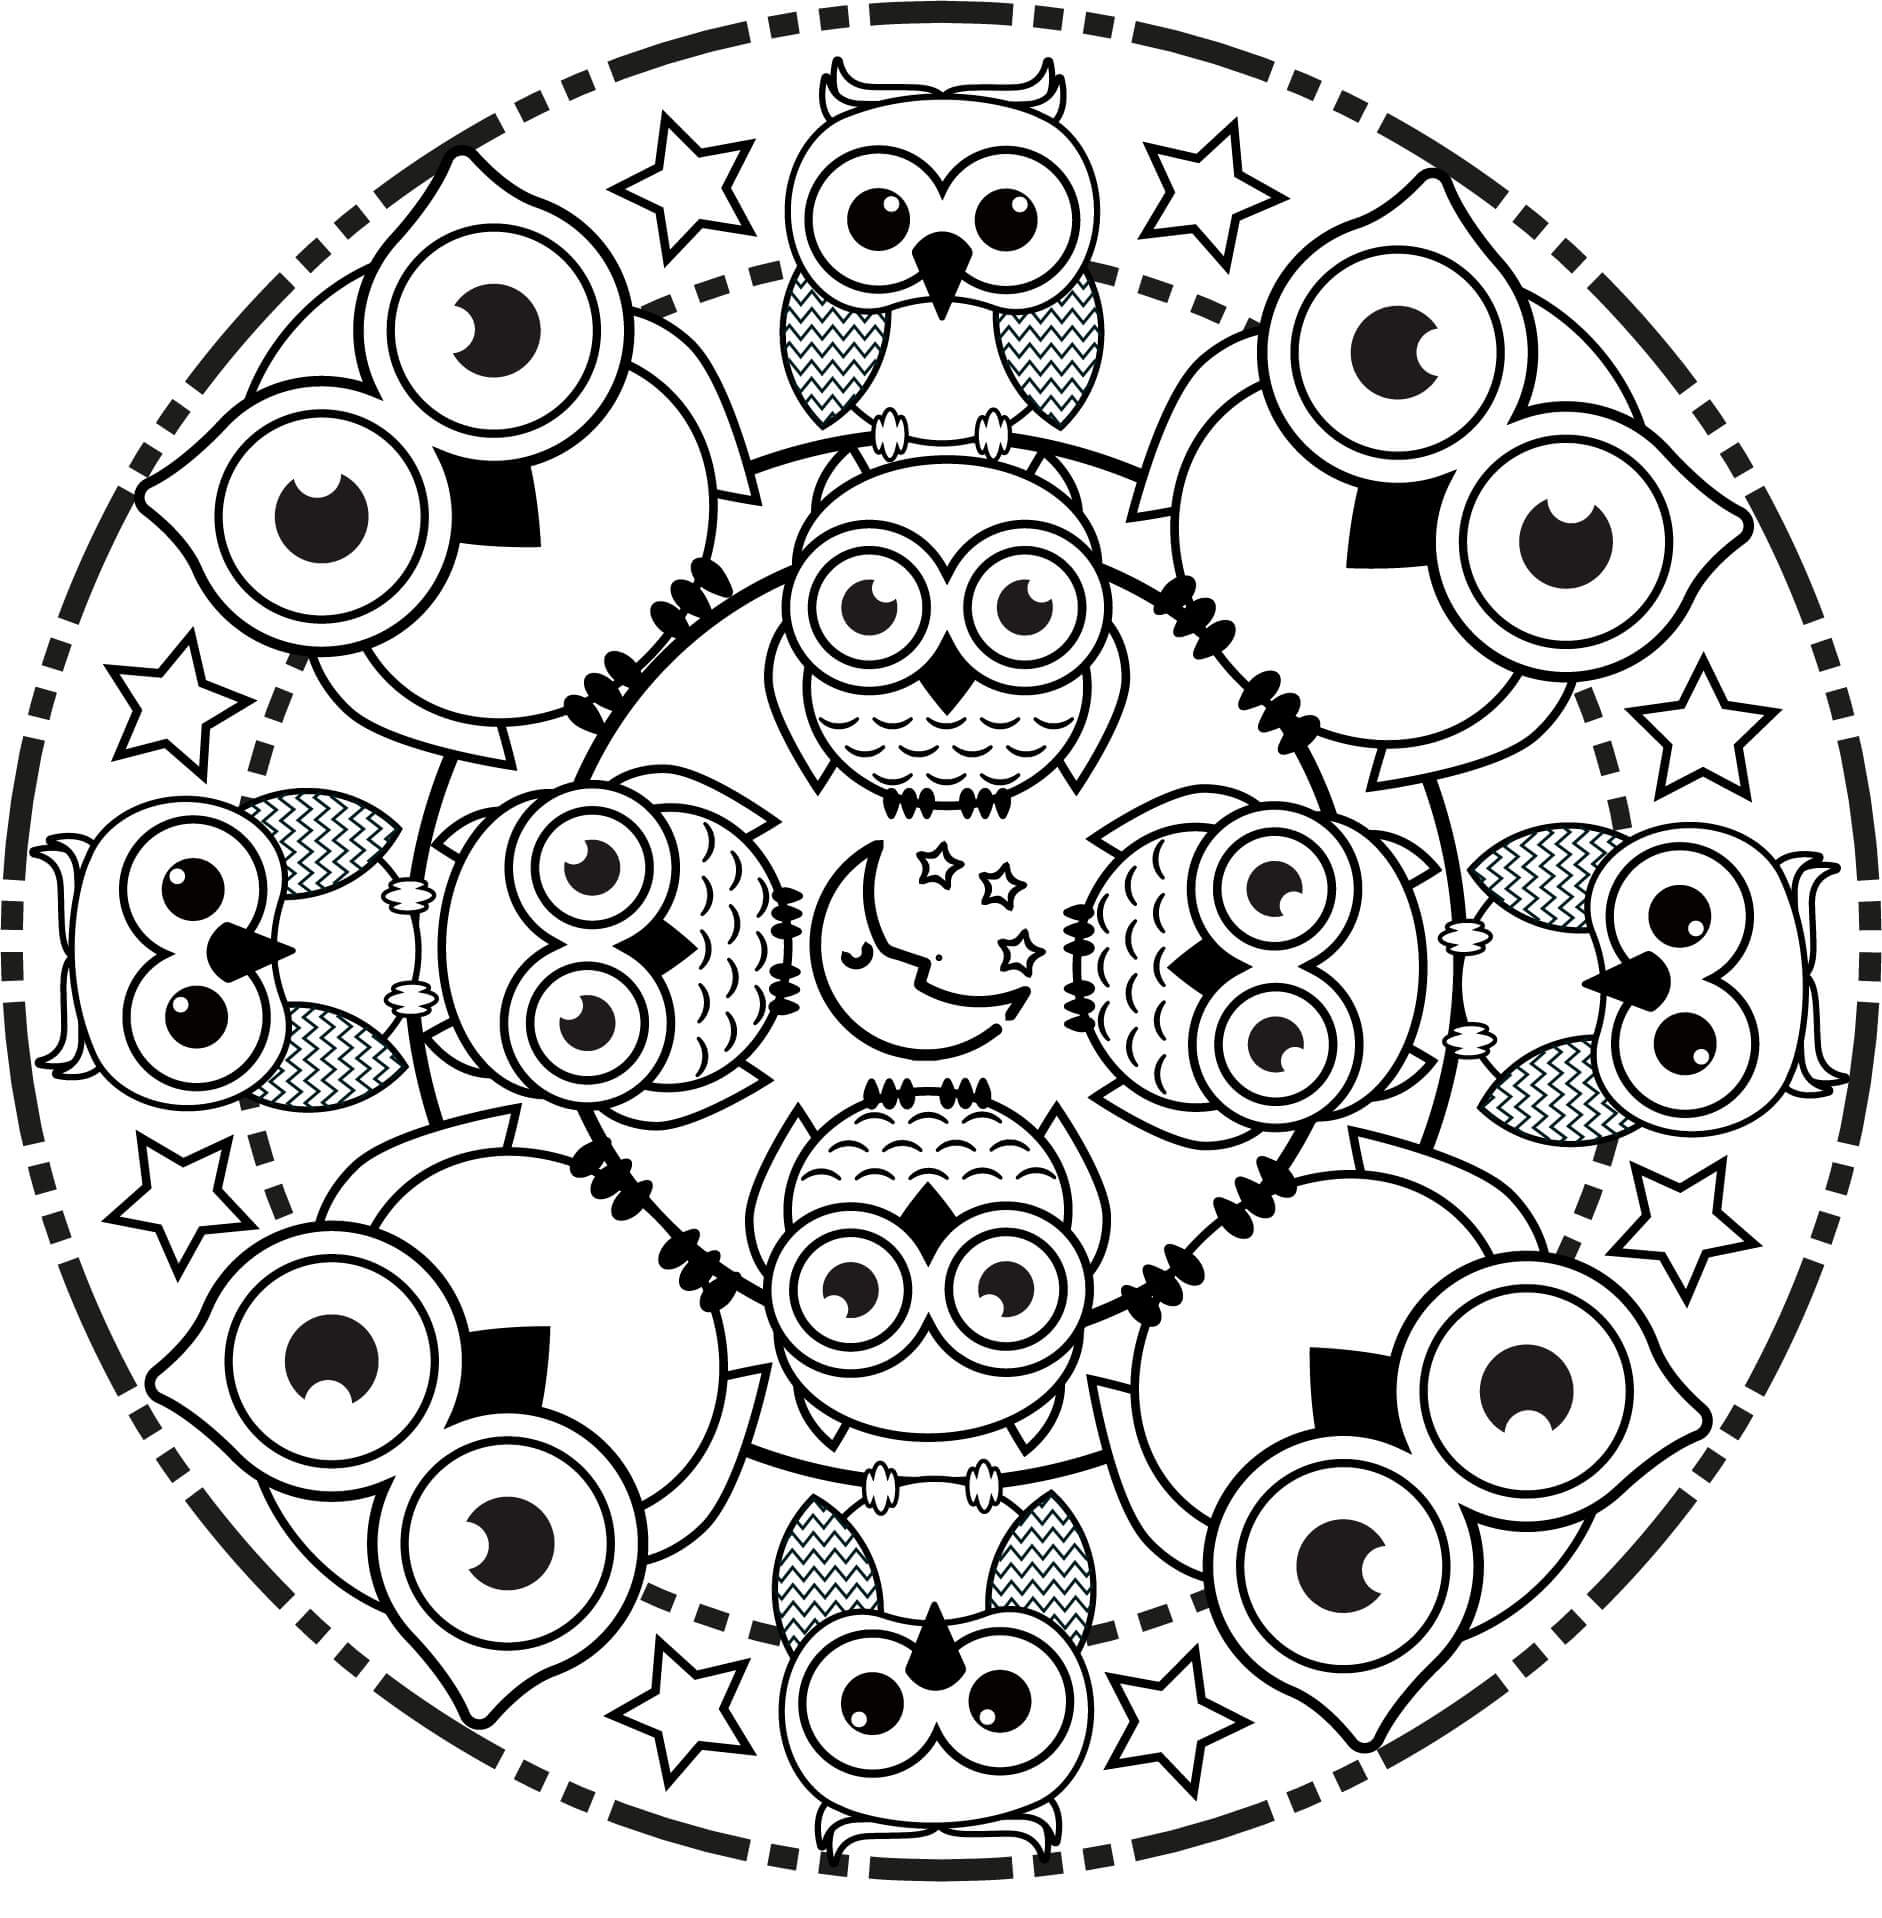 Mandala Owl Coloring Page - Sheet 1 Mandalas